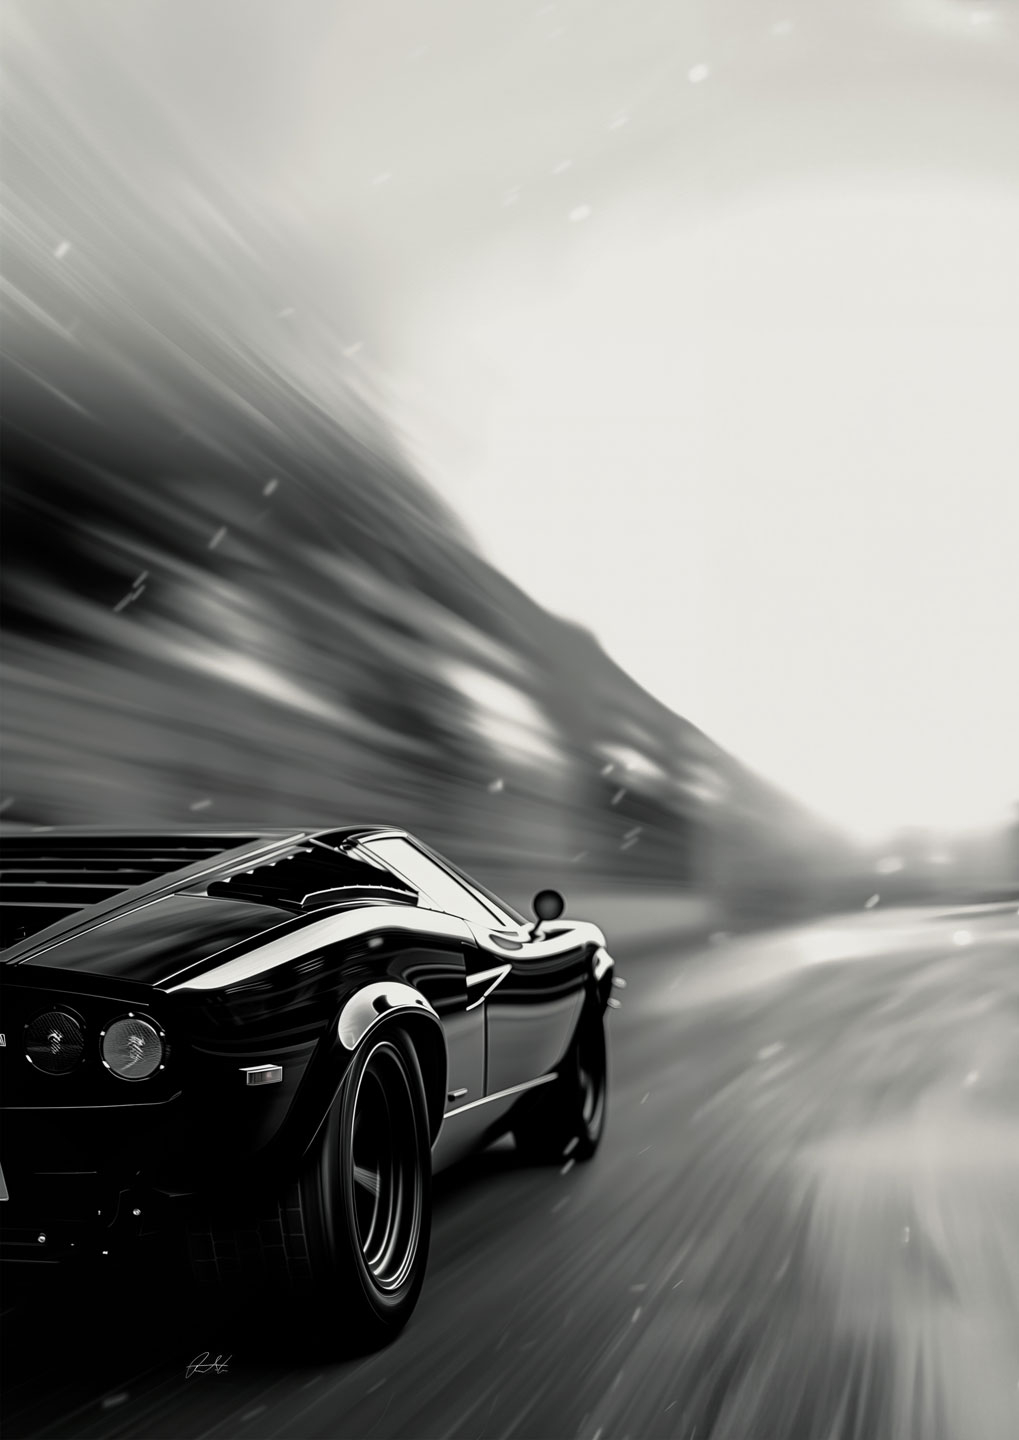 Billede af Lamborghini vers. 02 af Rasmus Lassen